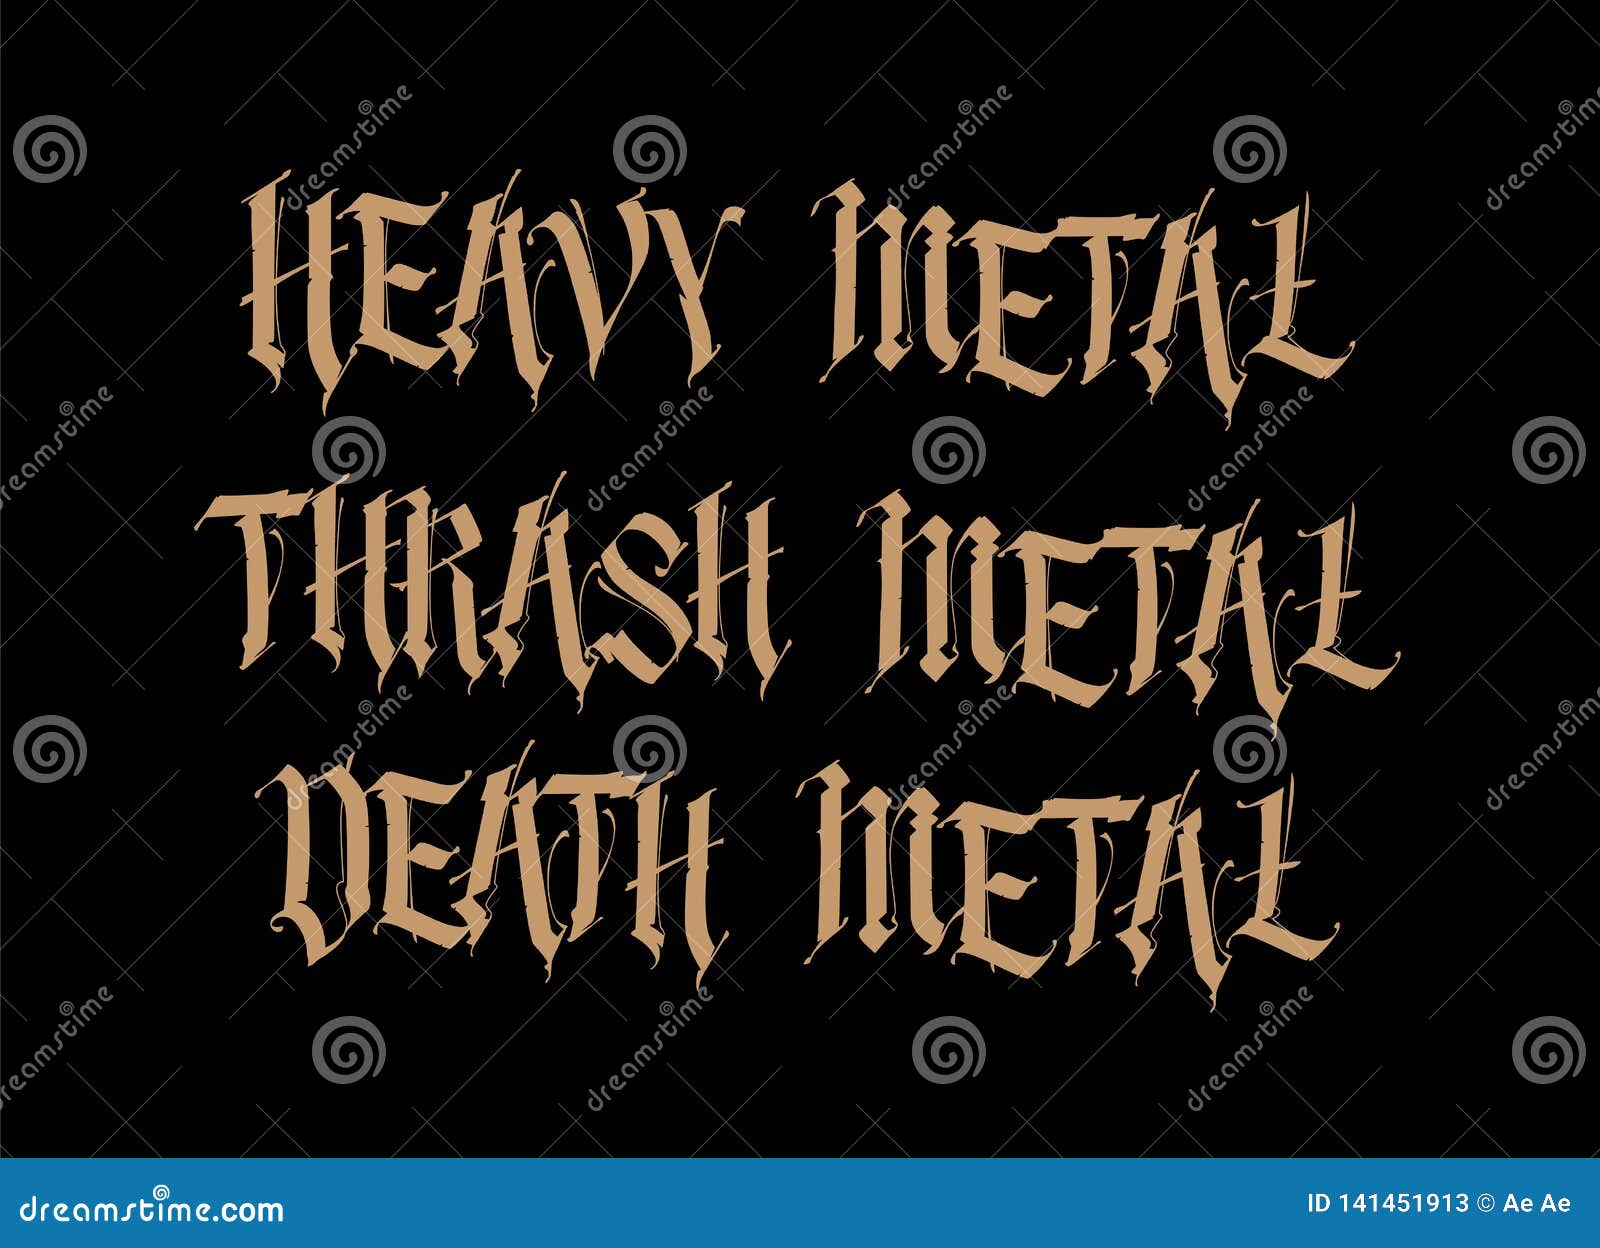 Draw awesome logo death metal black metal font by Gagarotak  Fiverr